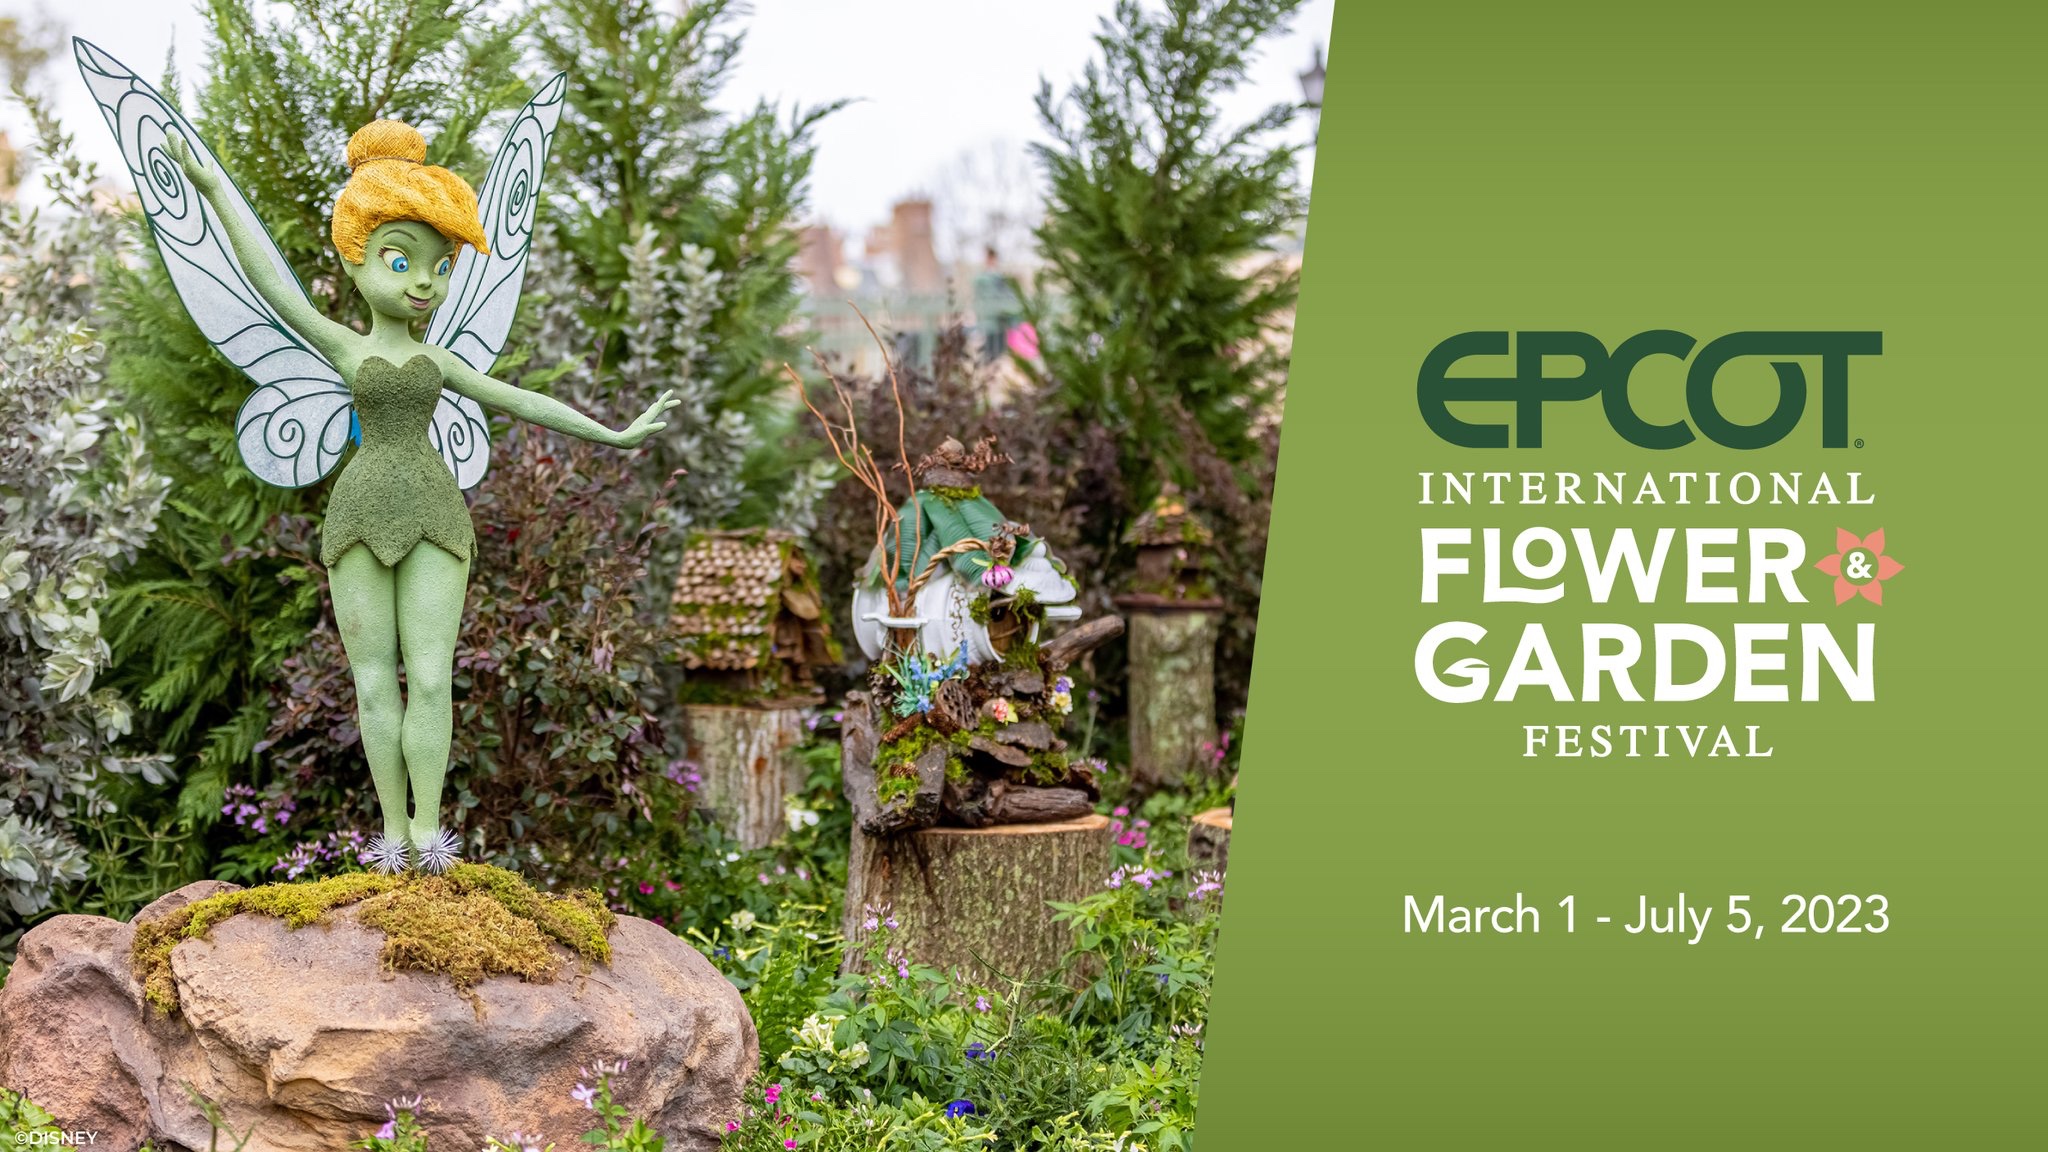 2023 EPCOT International Flower & Garden Festival Dates Announced